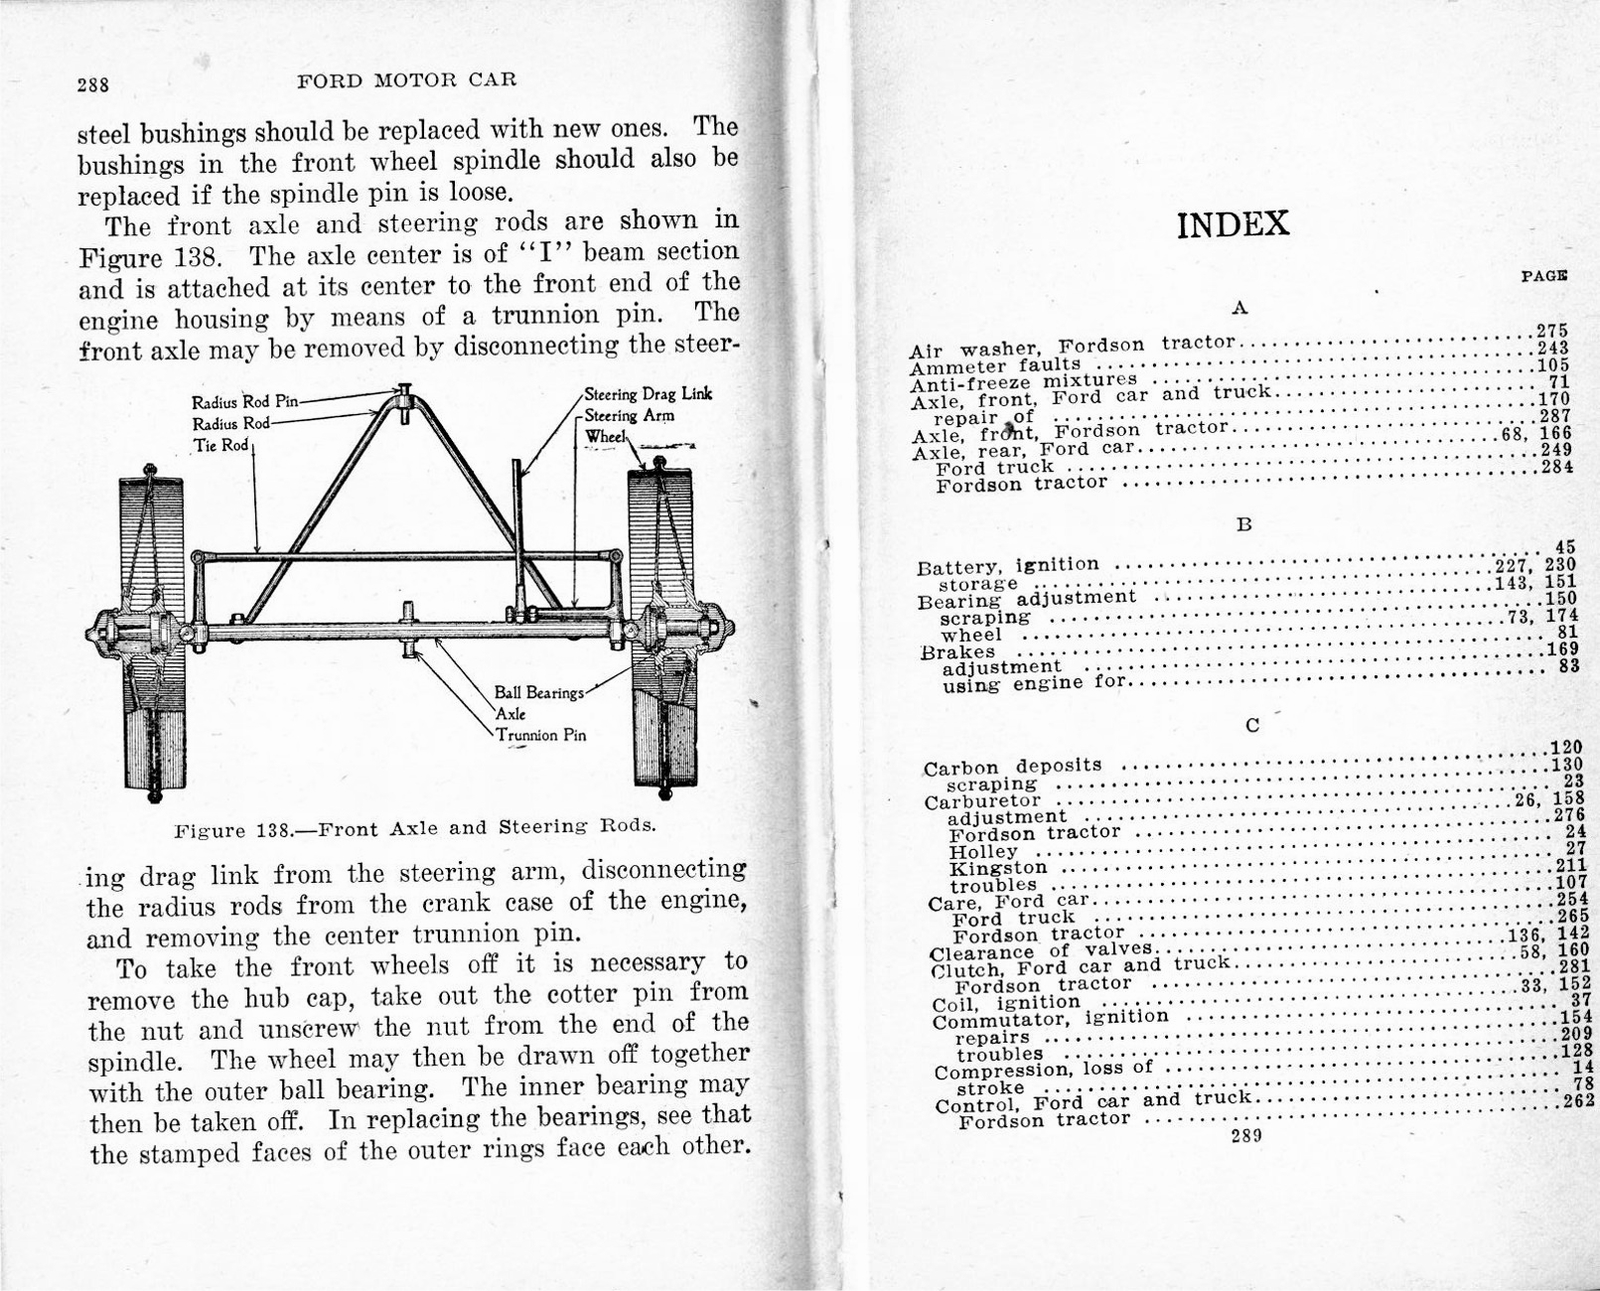 n_1917 Ford Car & Truck Manual-288-289.jpg